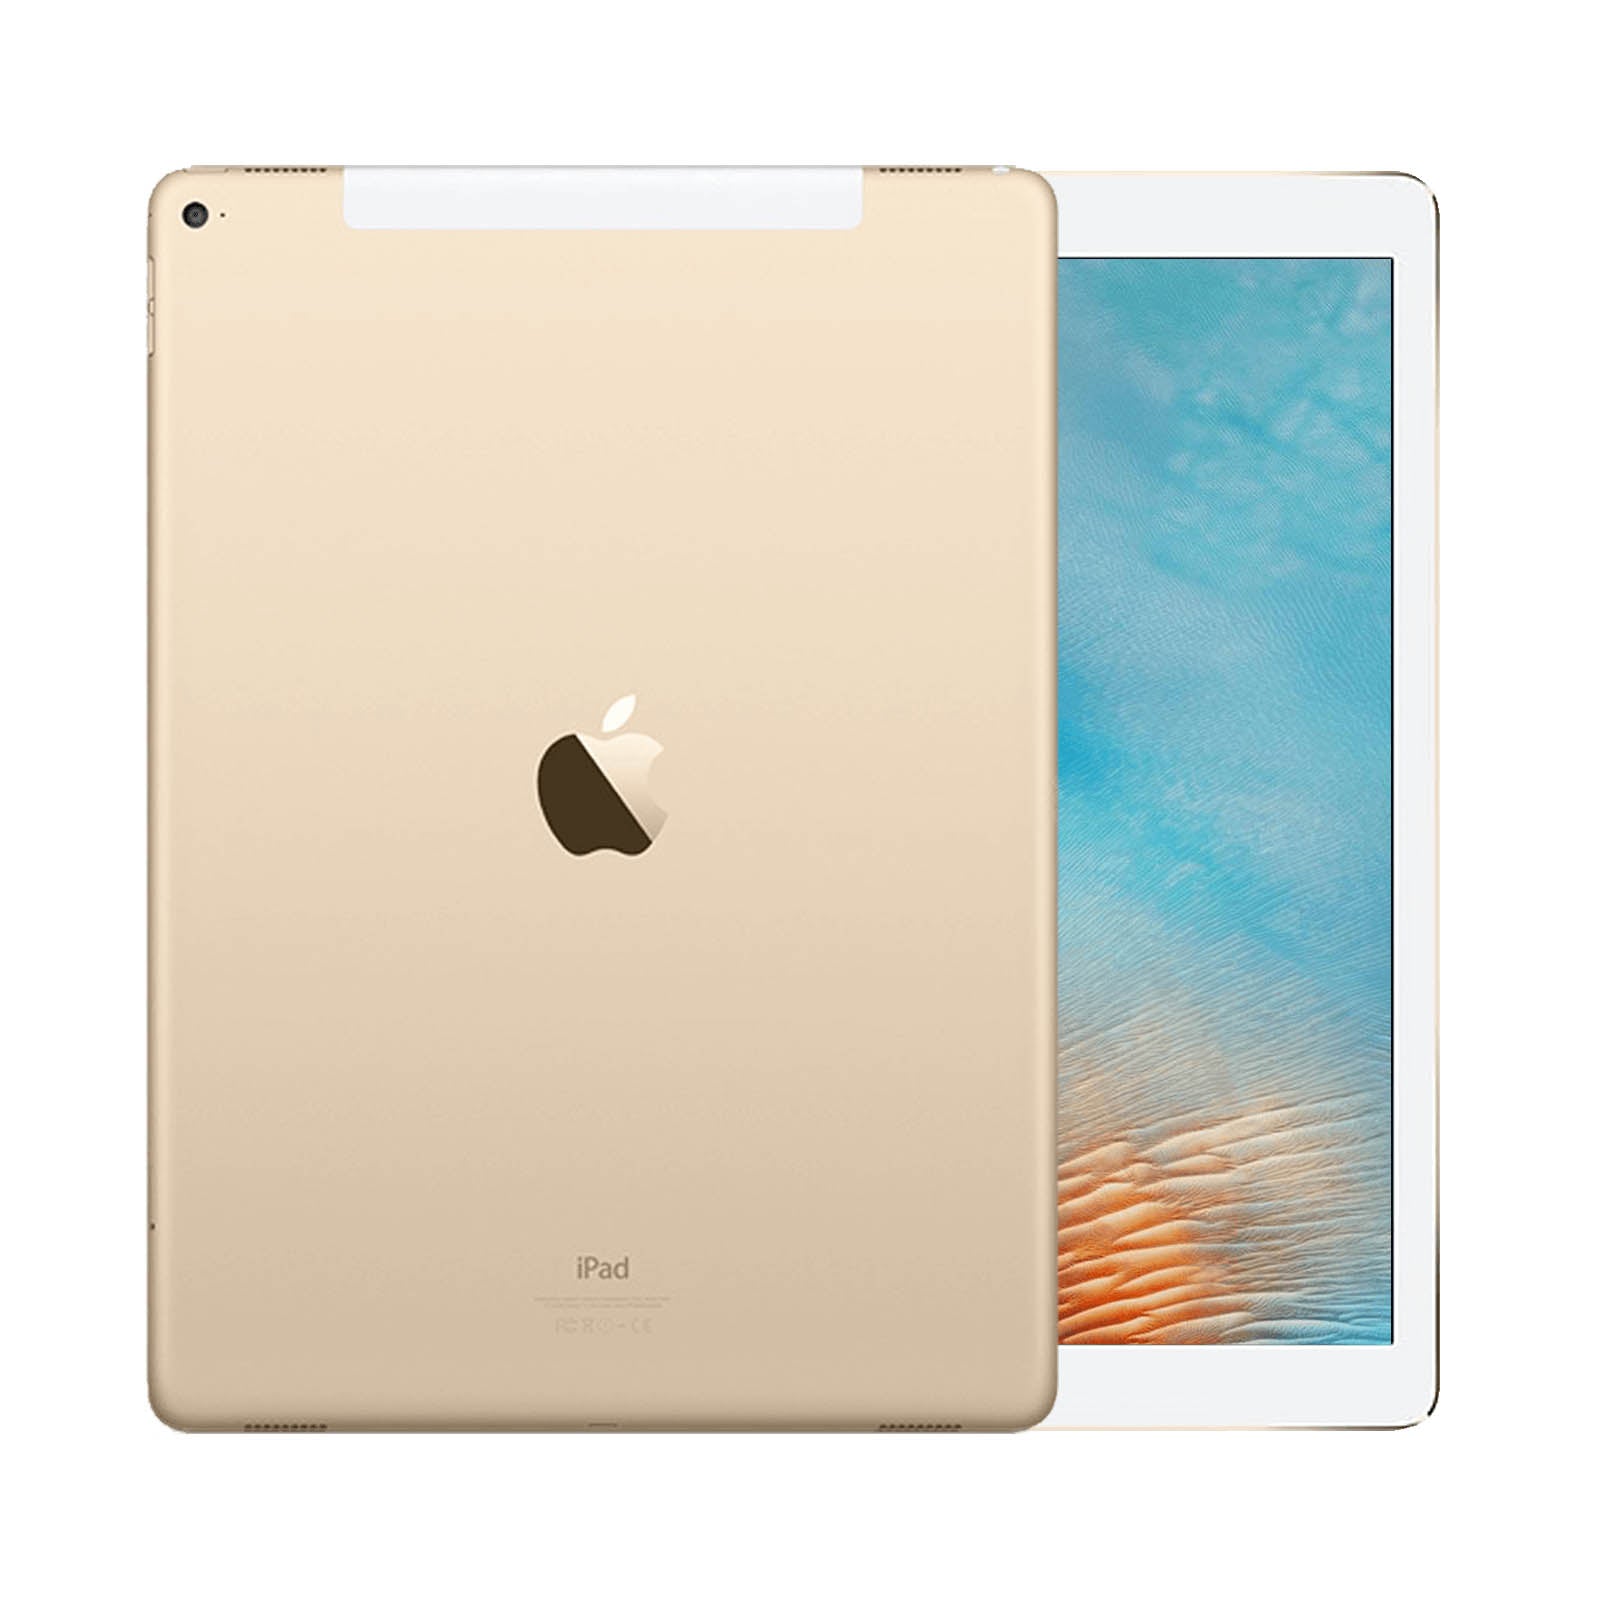 iPad Pro 12.9 Inch 2nd Gen 512GB Gold Good - Unlocked